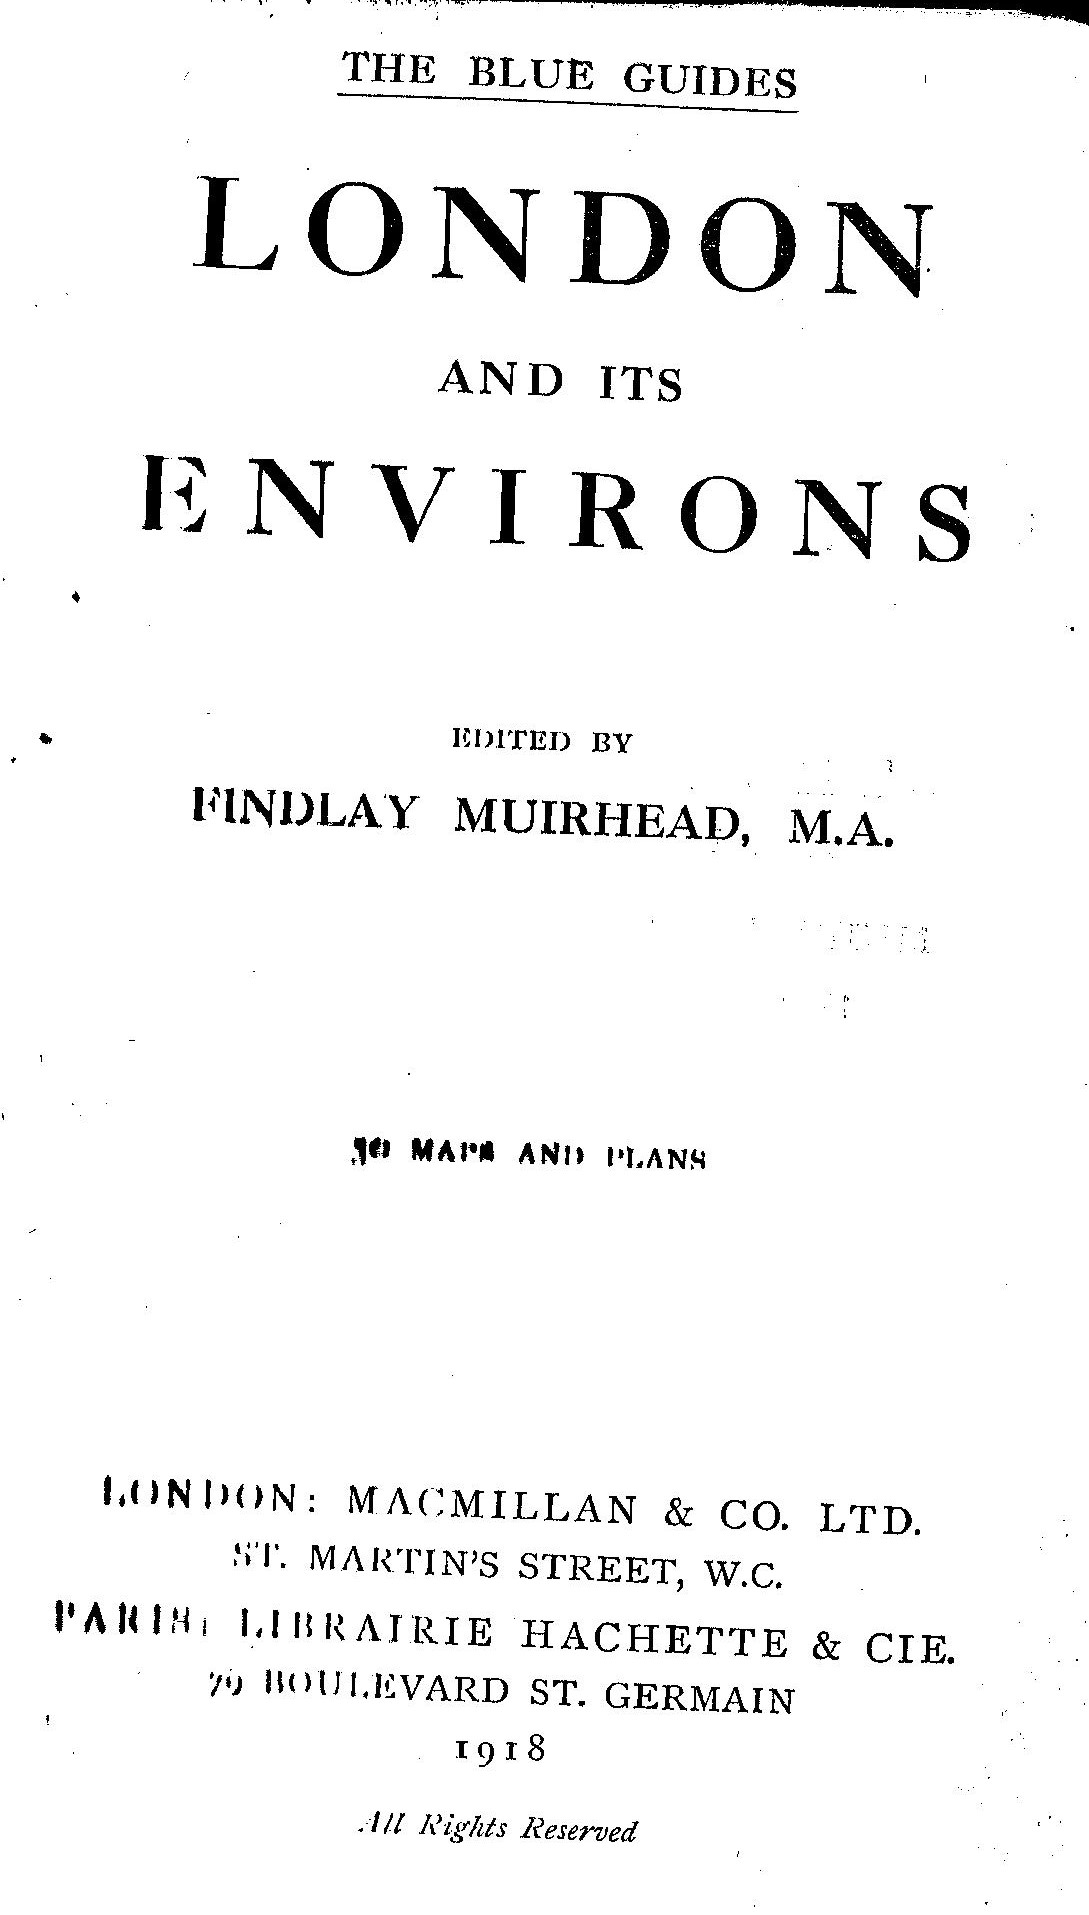 Muirheads London and its Environs PSL/1918/0001b 1